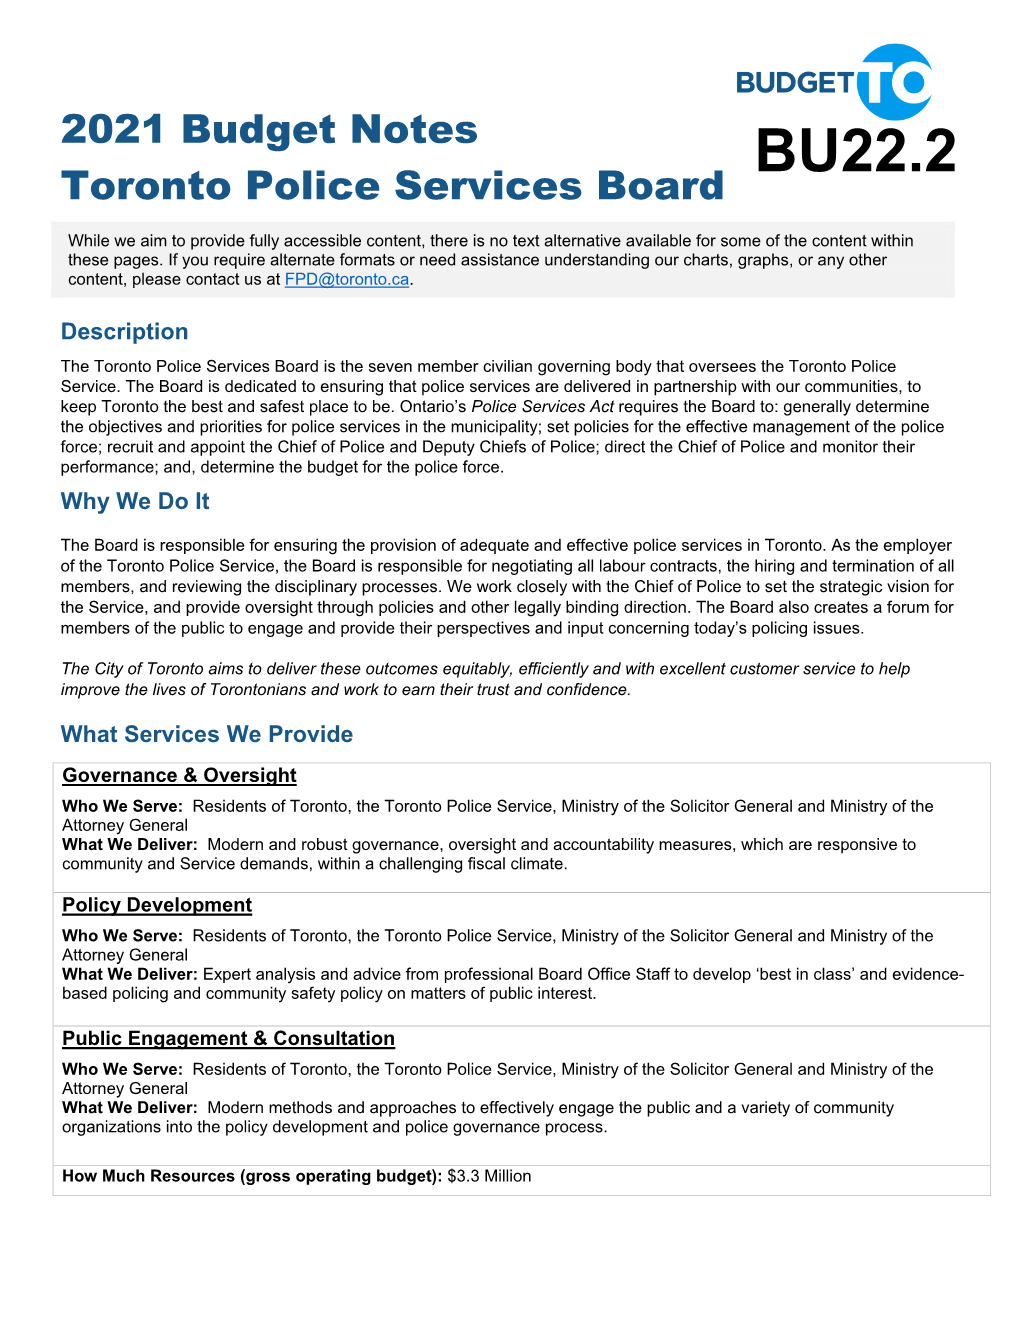 Toronto Police Services Board BU22.2